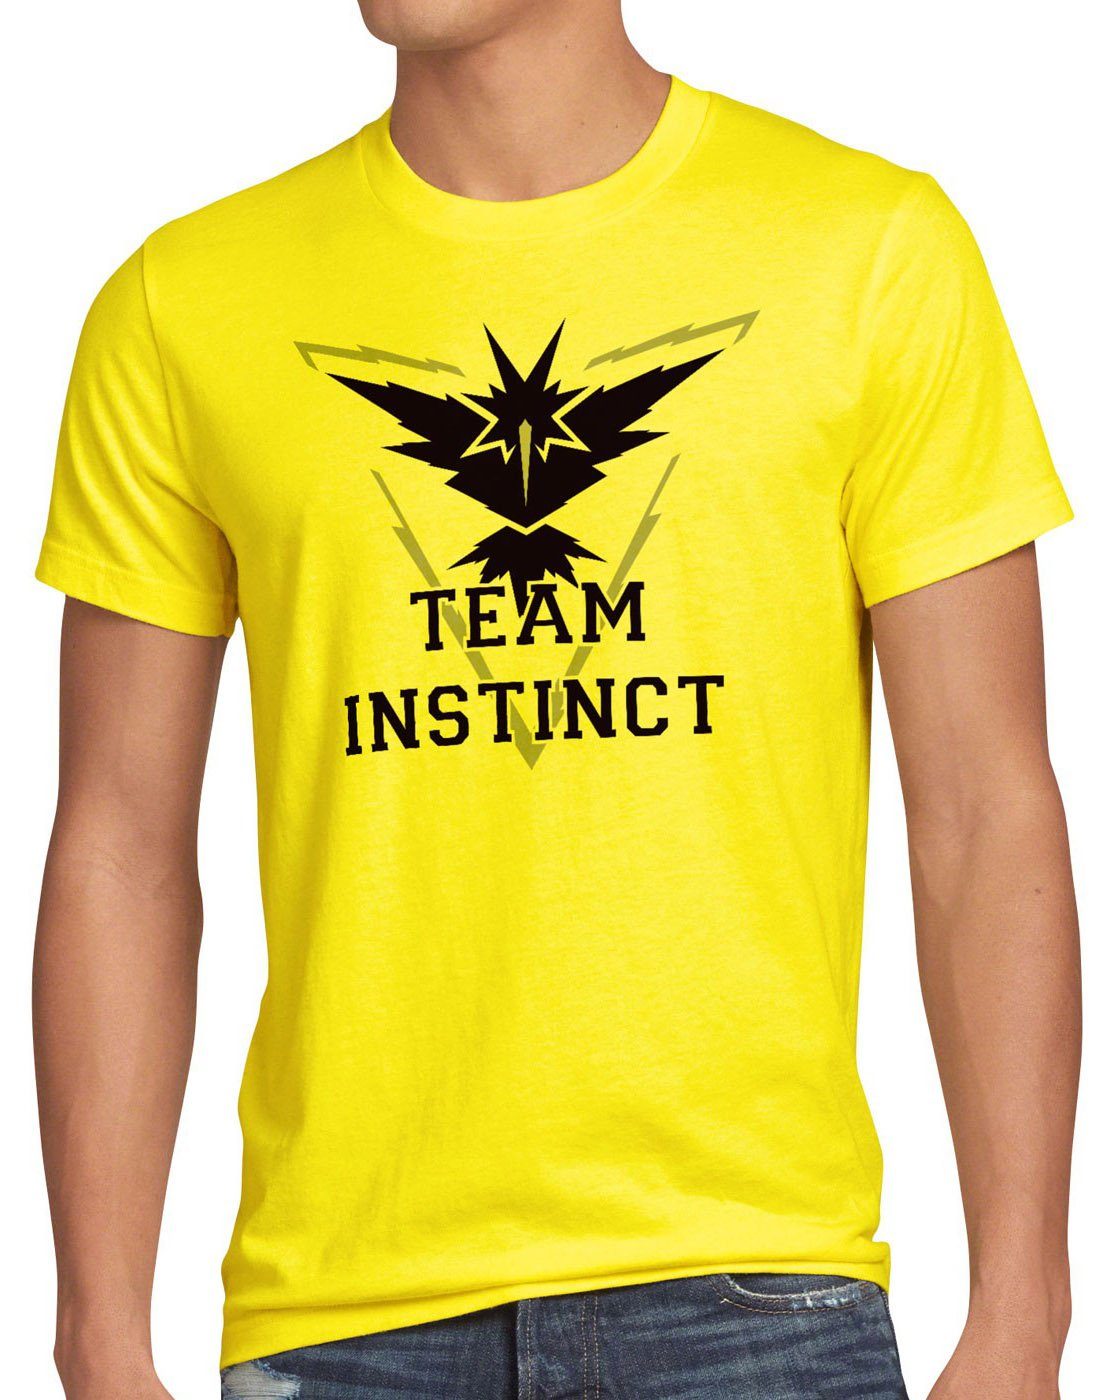 style3 Print-Shirt Herren T-Shirt boy intuition poeball arena gelb Instinct instinkt game poke Team